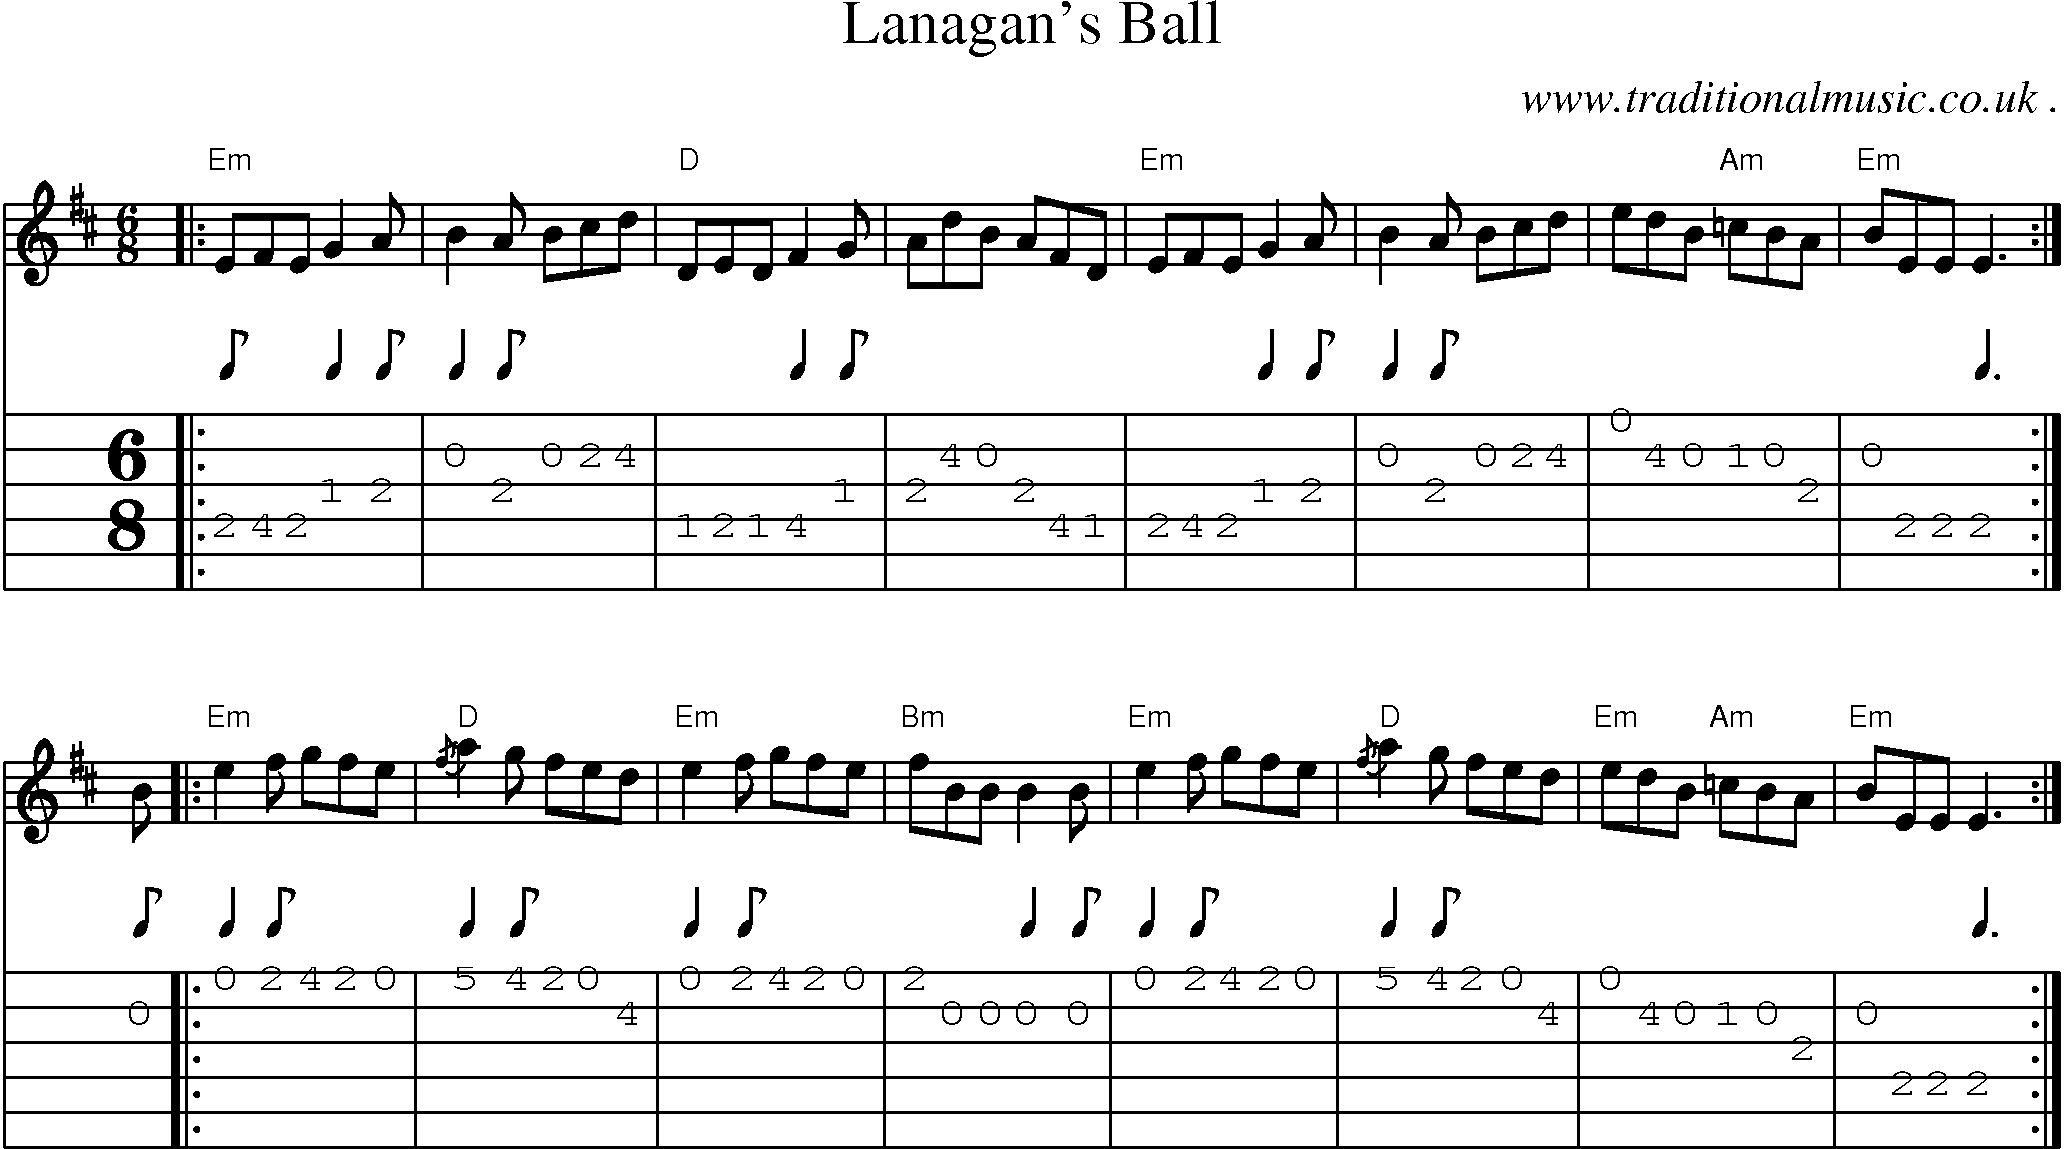 Sheet-music  score, Chords and Guitar Tabs for Lanagans Ball